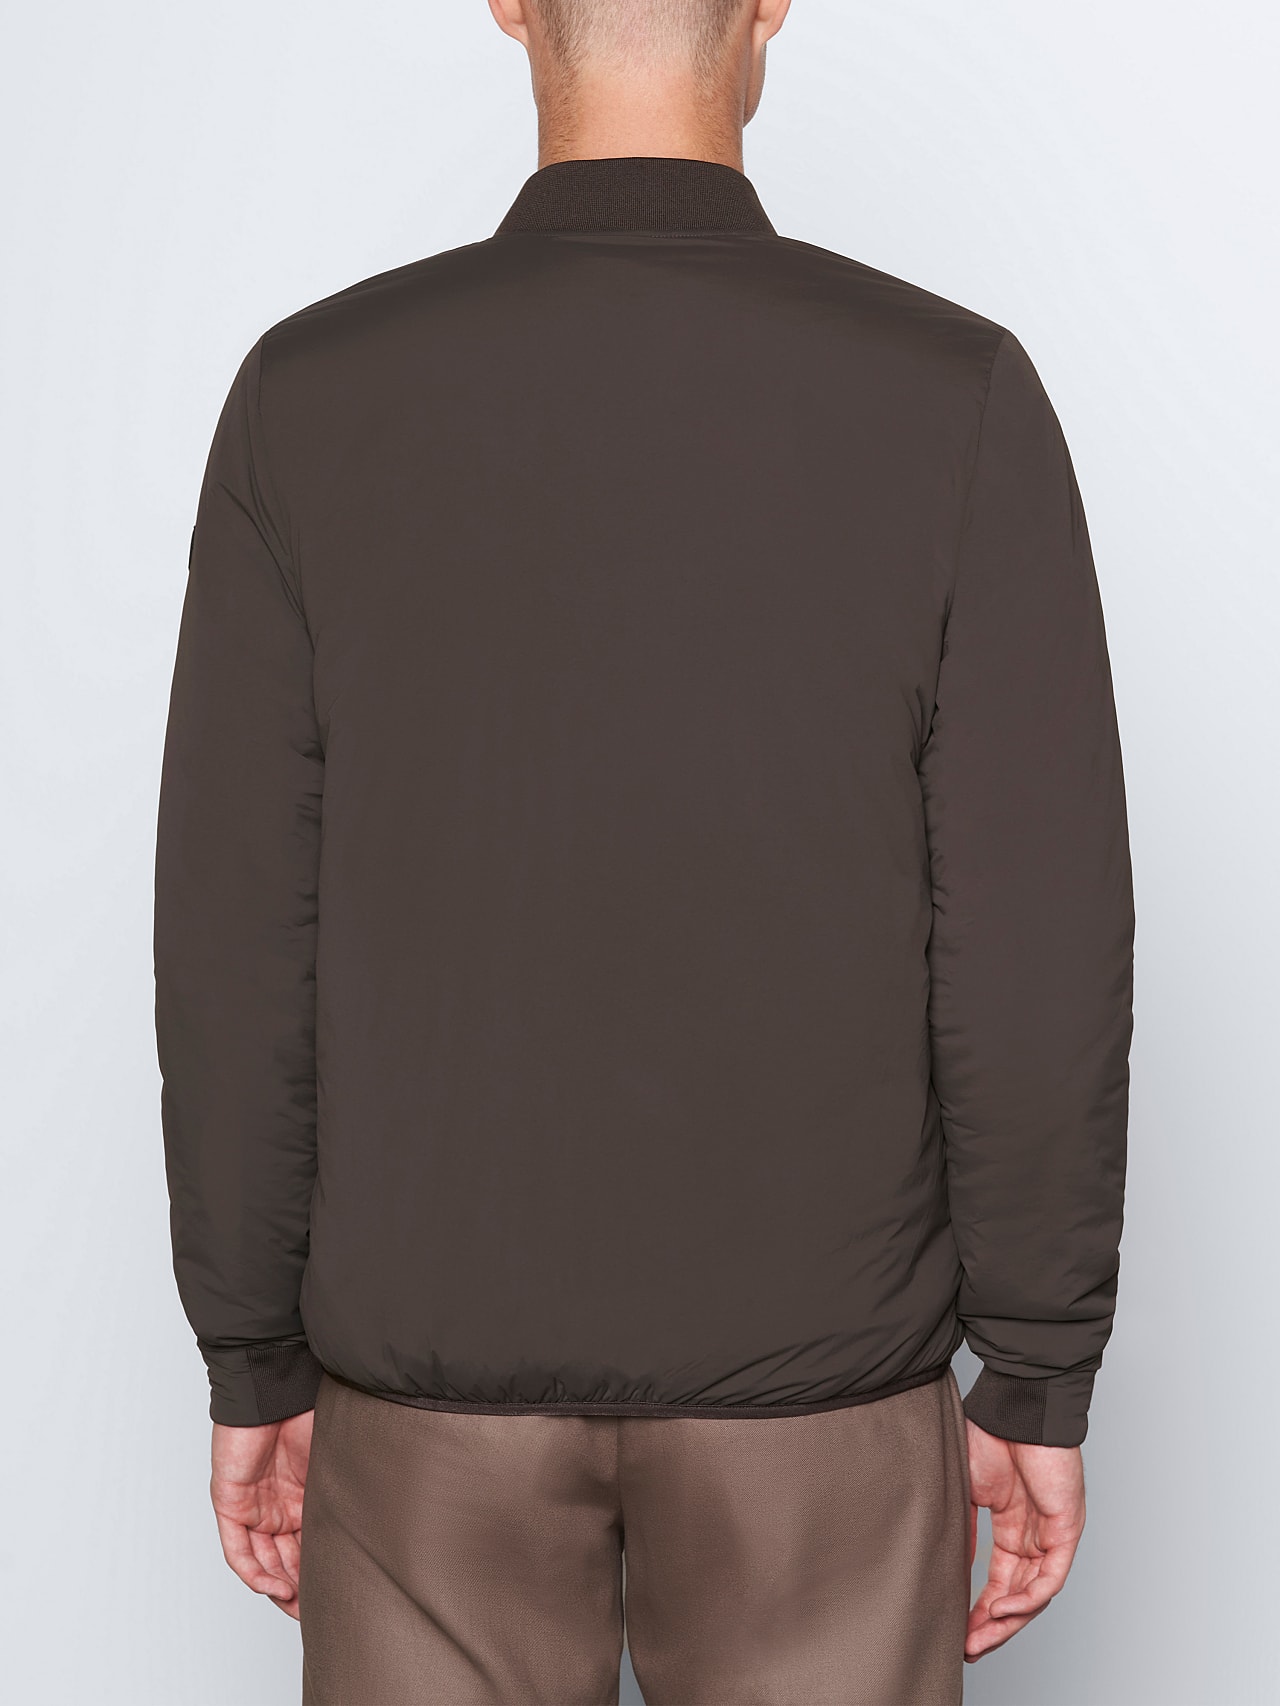 AlphaTauri | OPRIM V3.Y5.02 | Padded PrimaLoft® Jacket in dark brown for Men